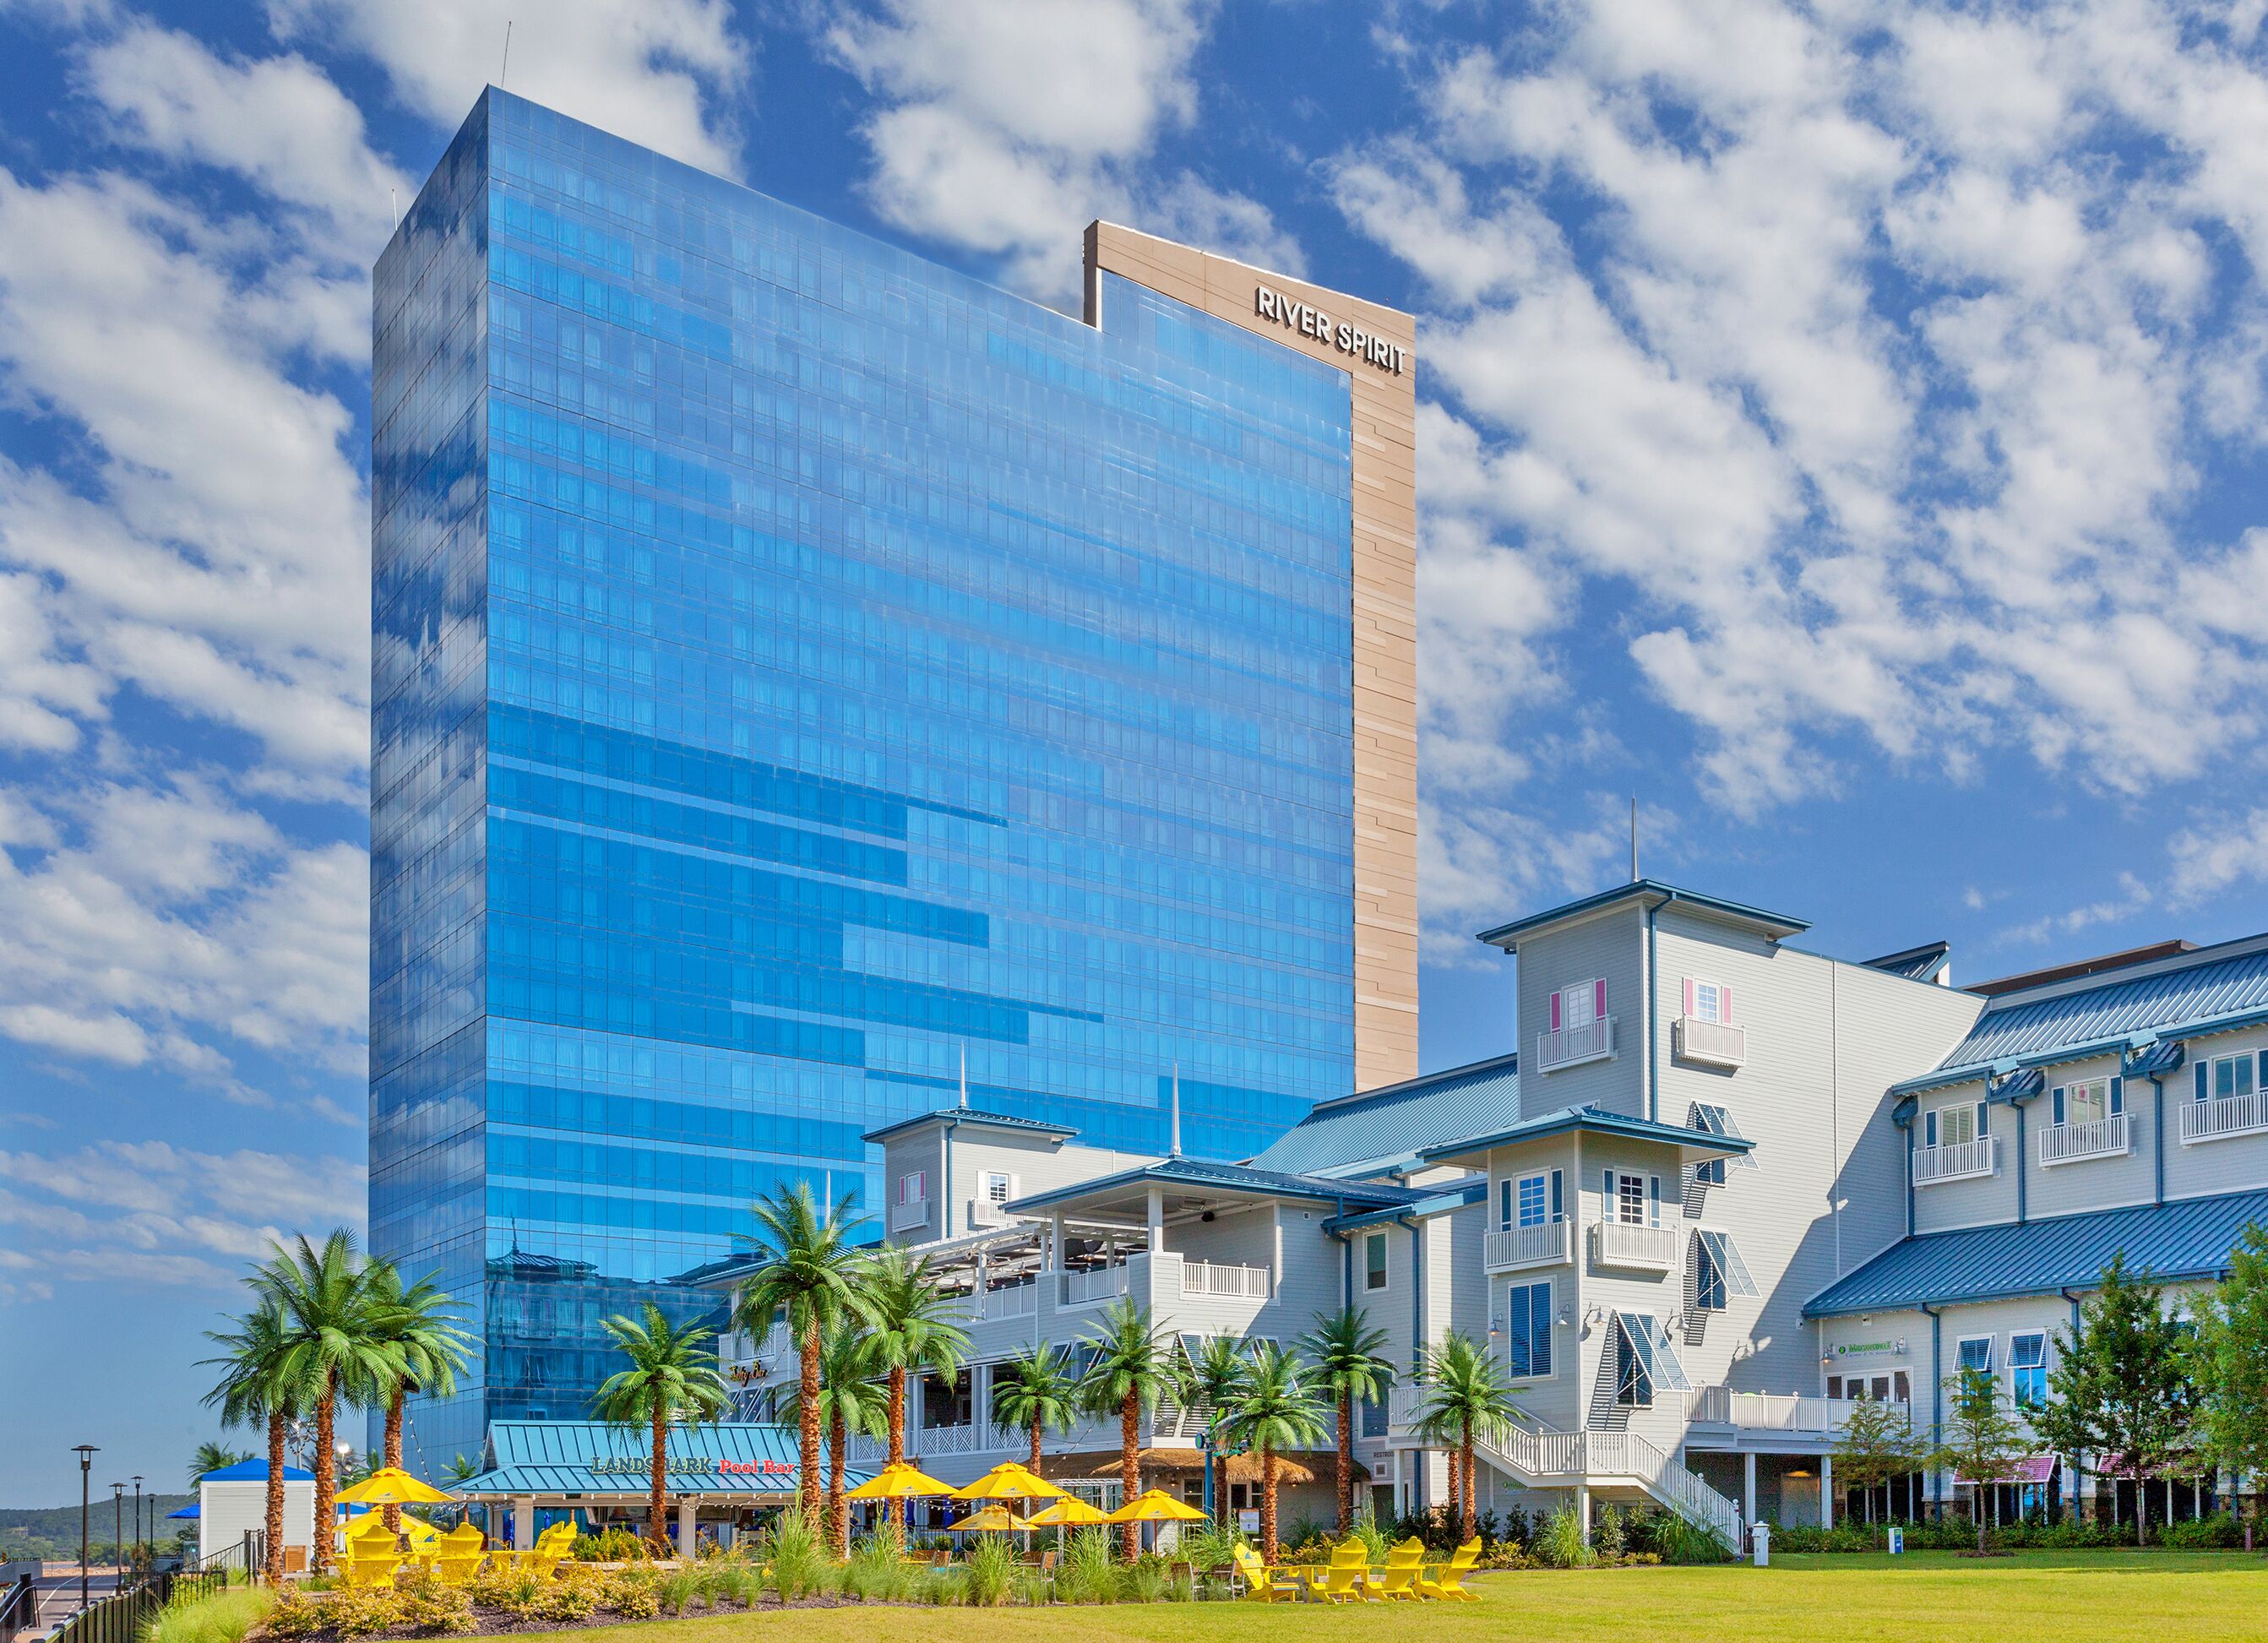 Building view of River Spirit Casino Resort